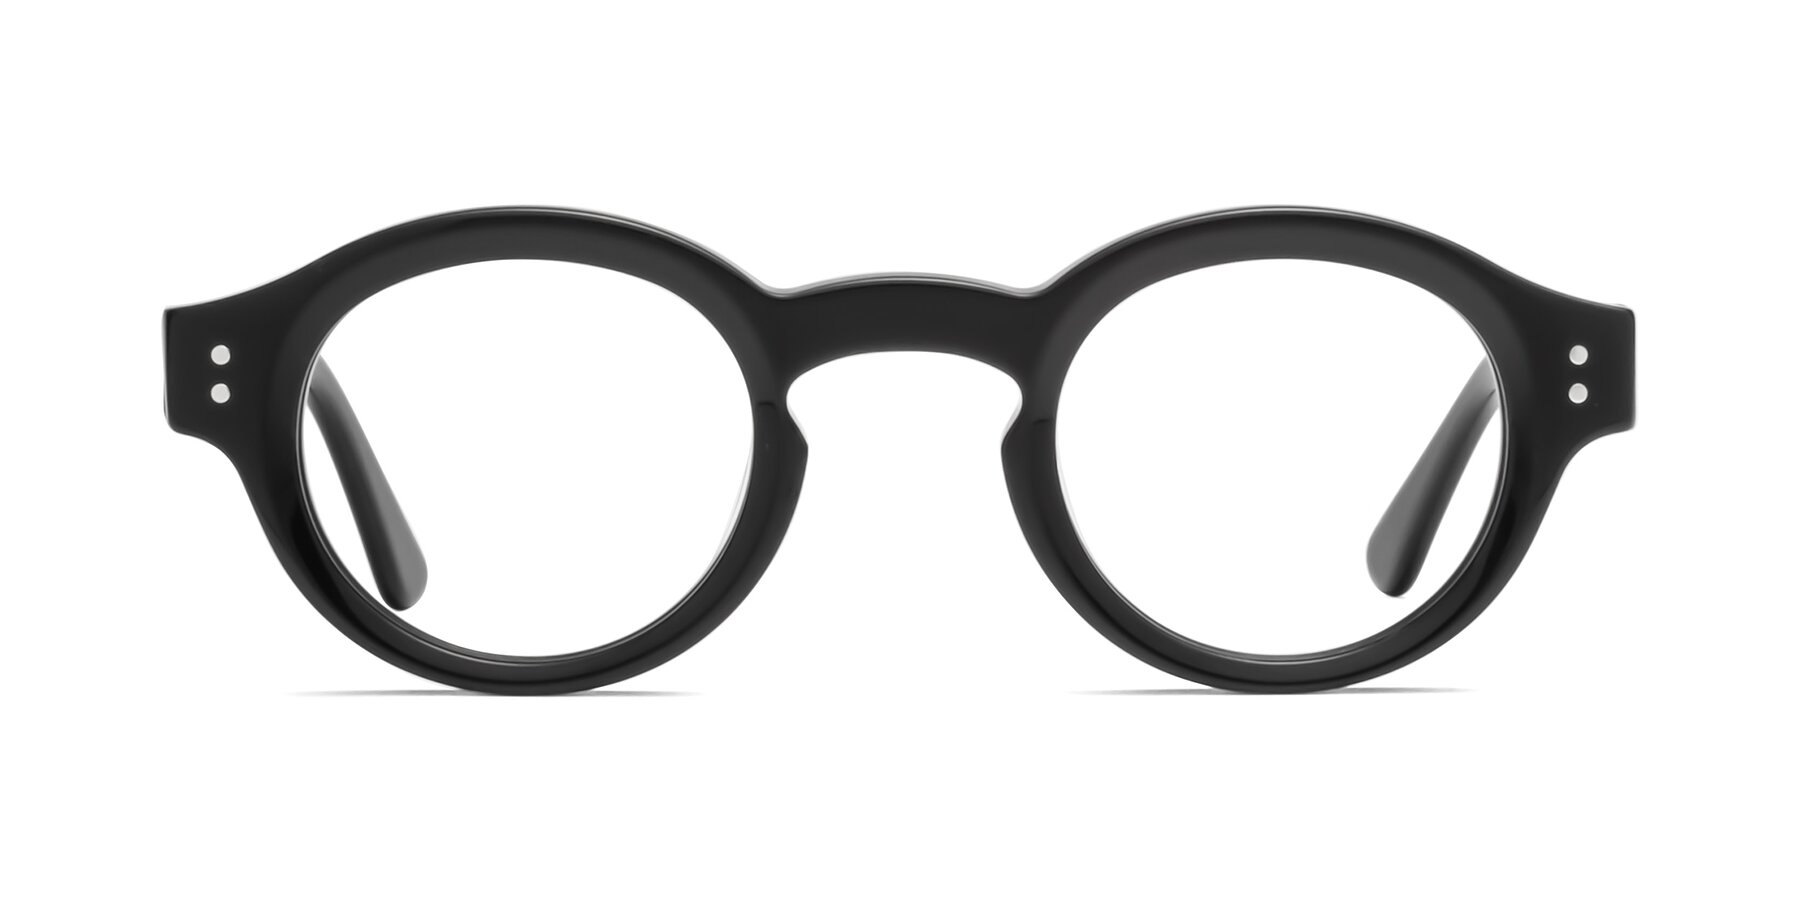 Pine - Black Sunglasses Frame